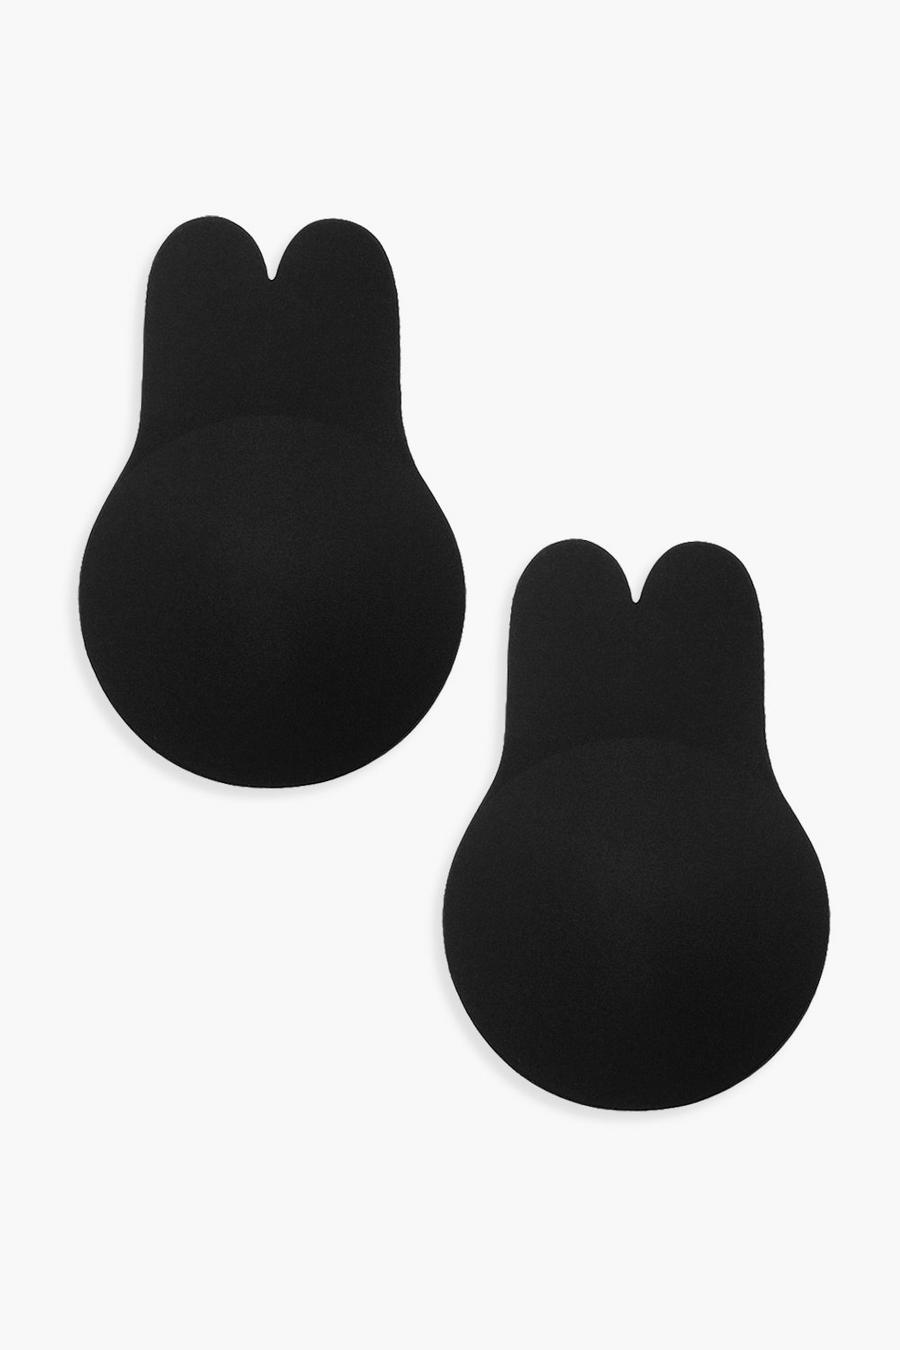 Fabric Brust-Lift 10cm, Schwarz black